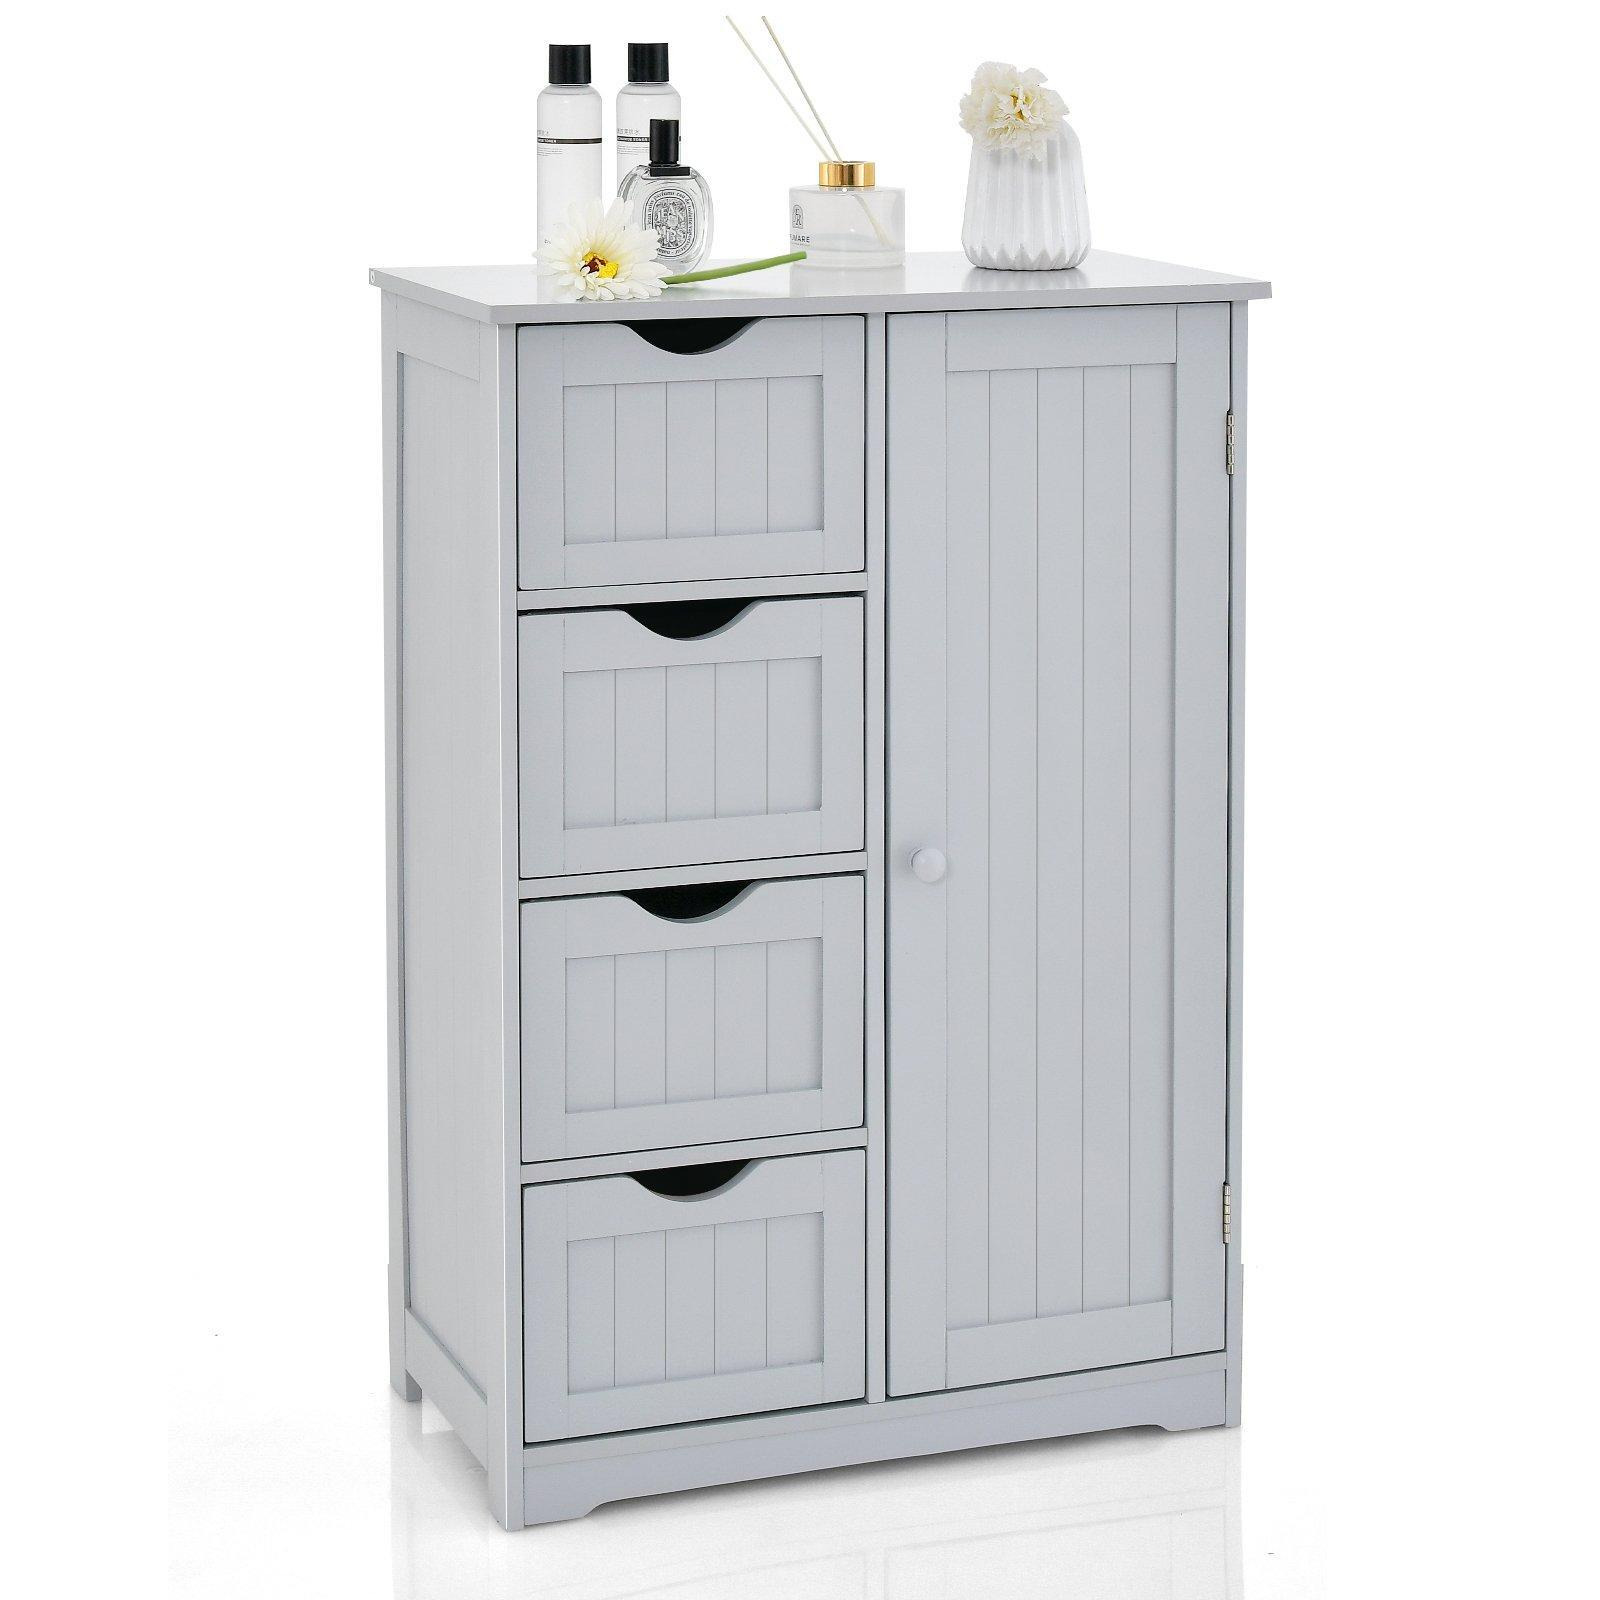 Bathroom Floor Cabinet Storage Cupboard Organizer W/Adjustable Shelf & 4 Drawers - image 1